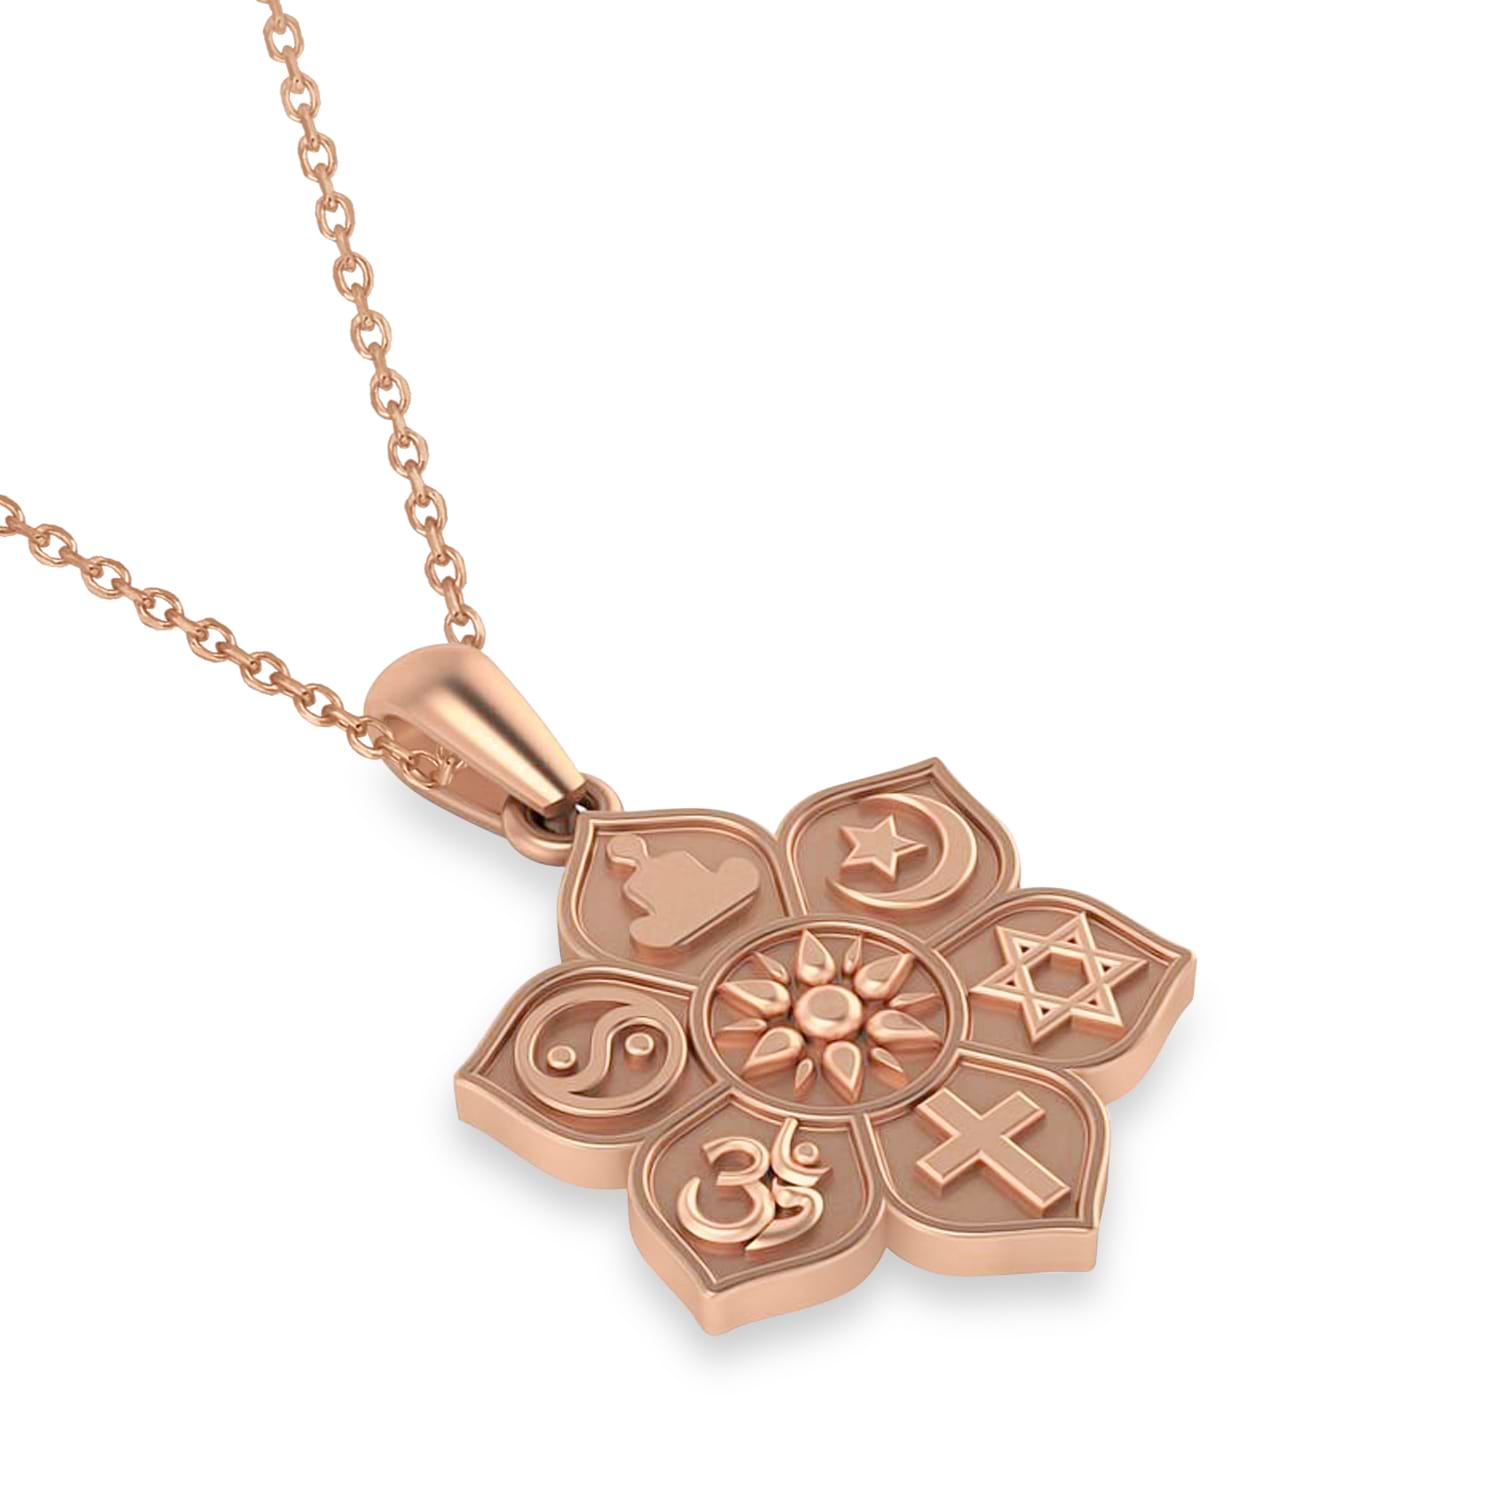 Coexist Symbols on Lotus Flower Pendant Necklace 14k Rose Gold